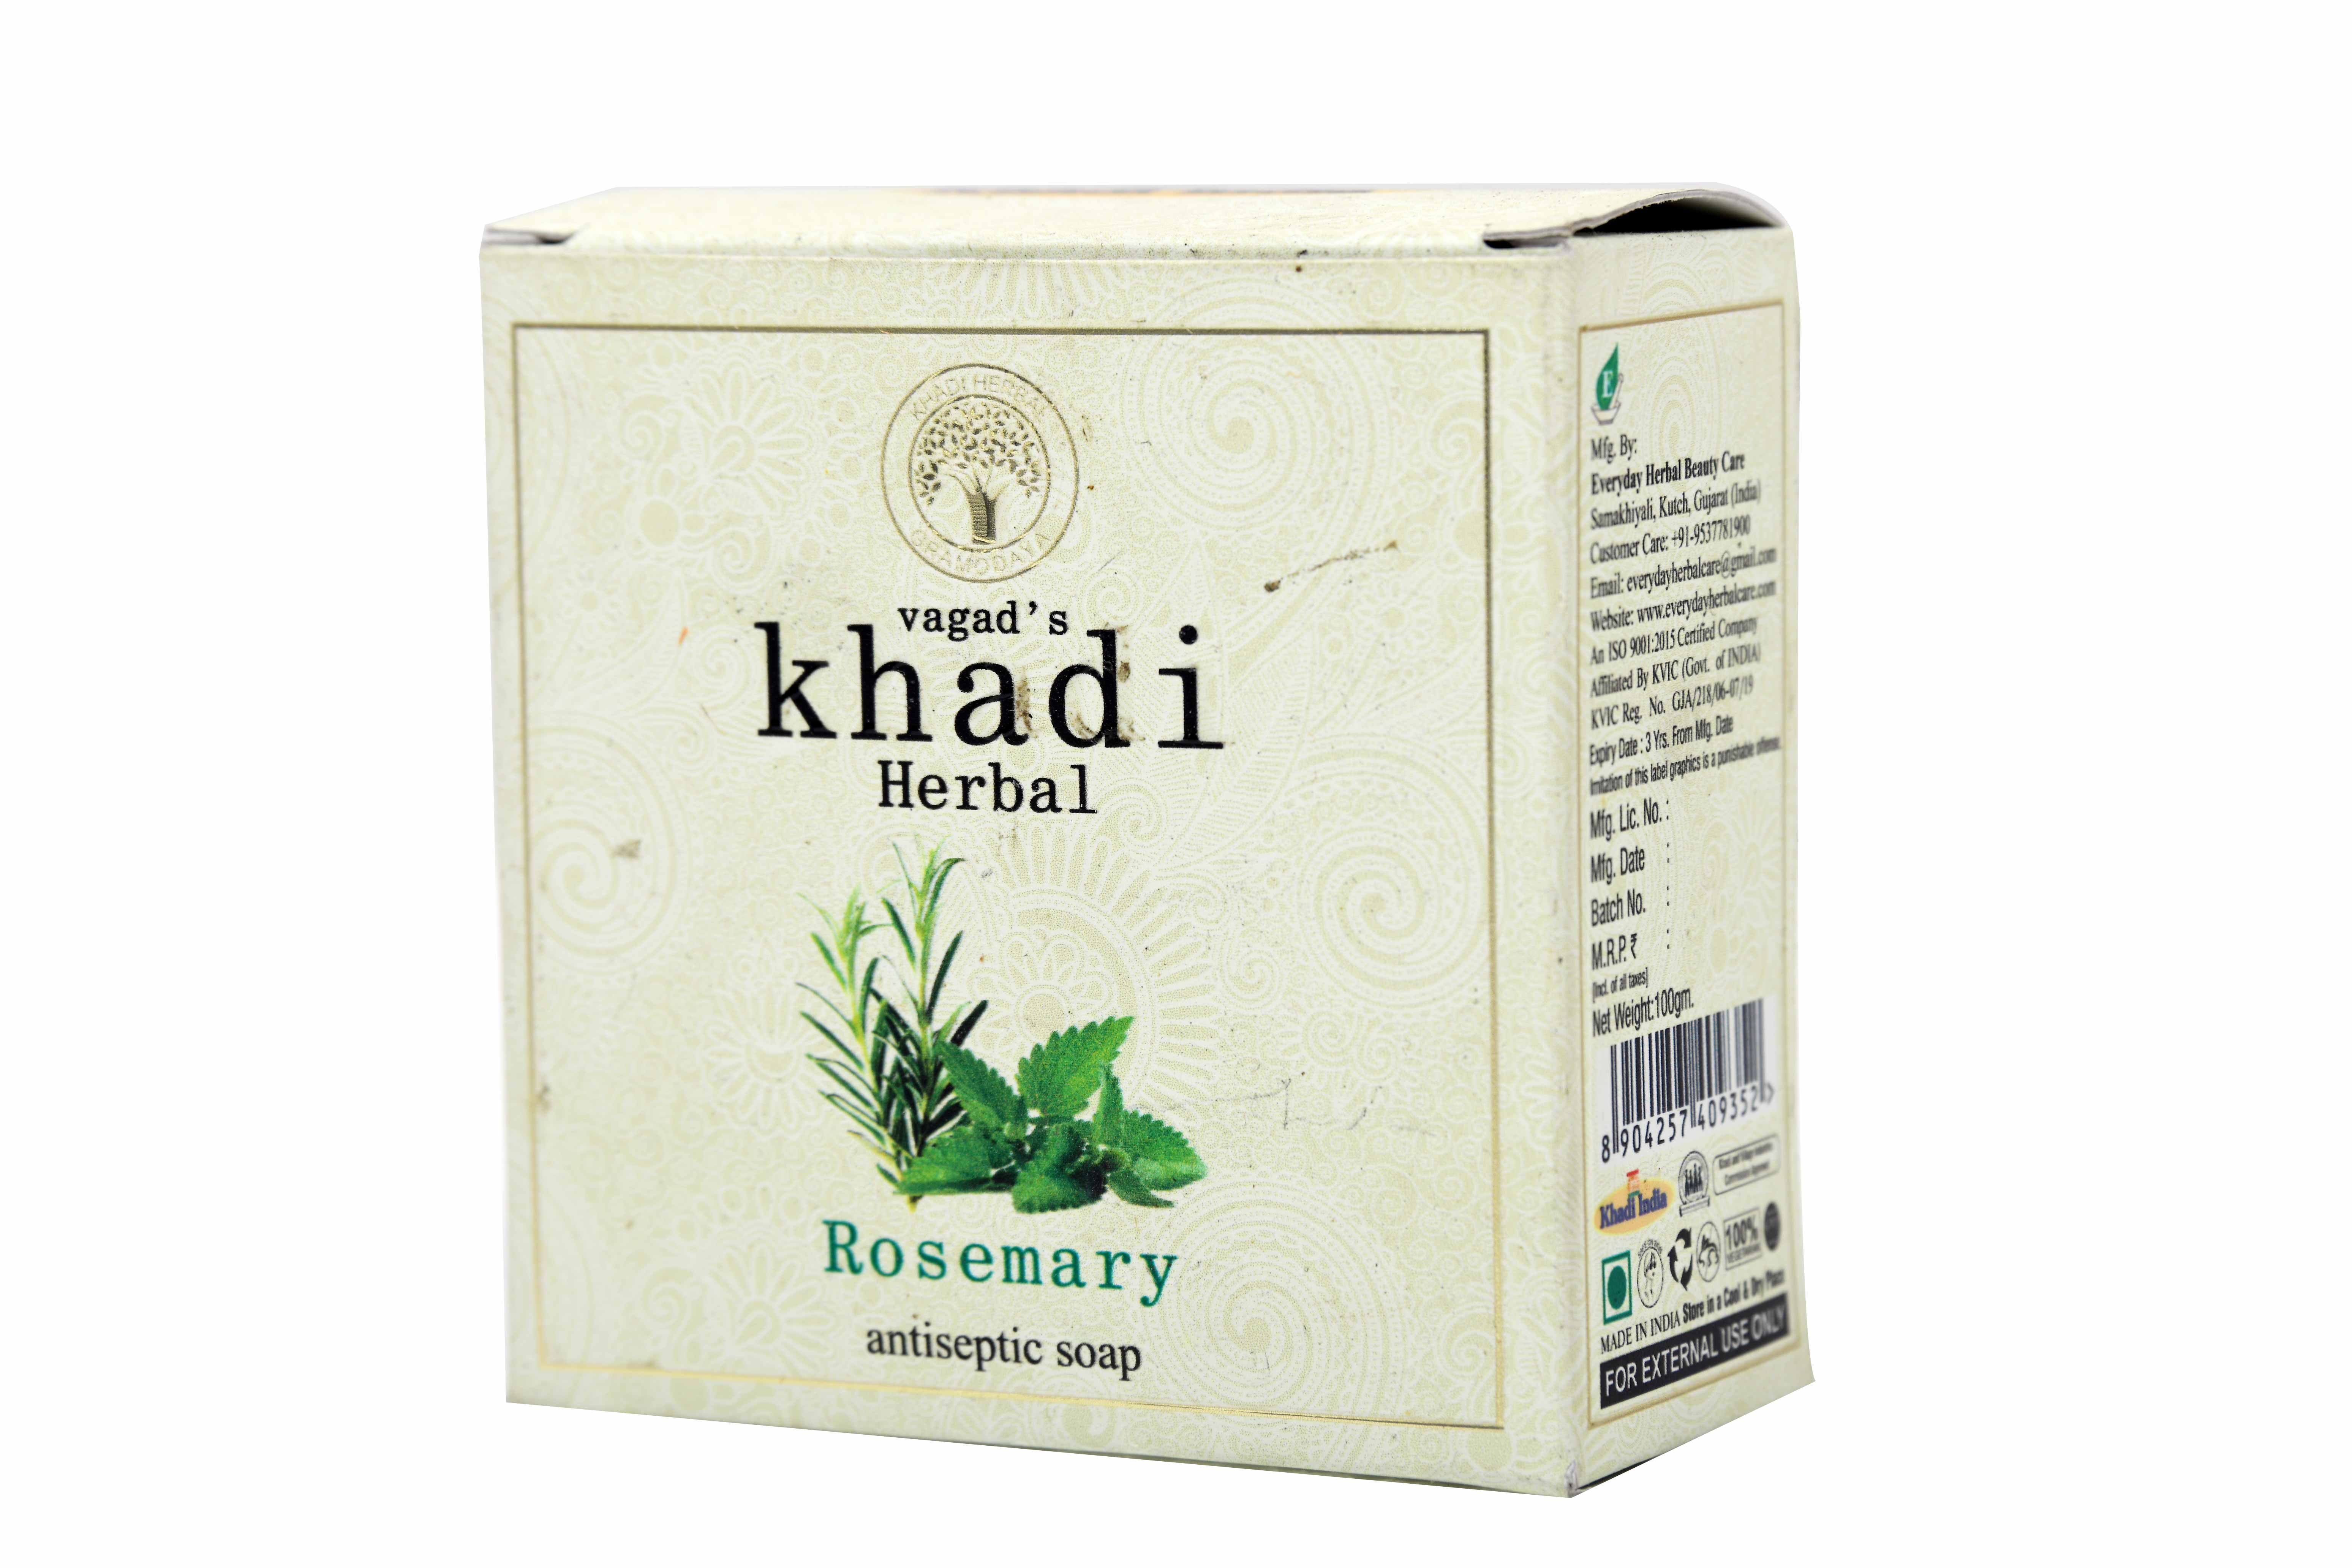 Buy Vagad's Khadi Rosemary Antiseptic Milky Soap at Best Price Online